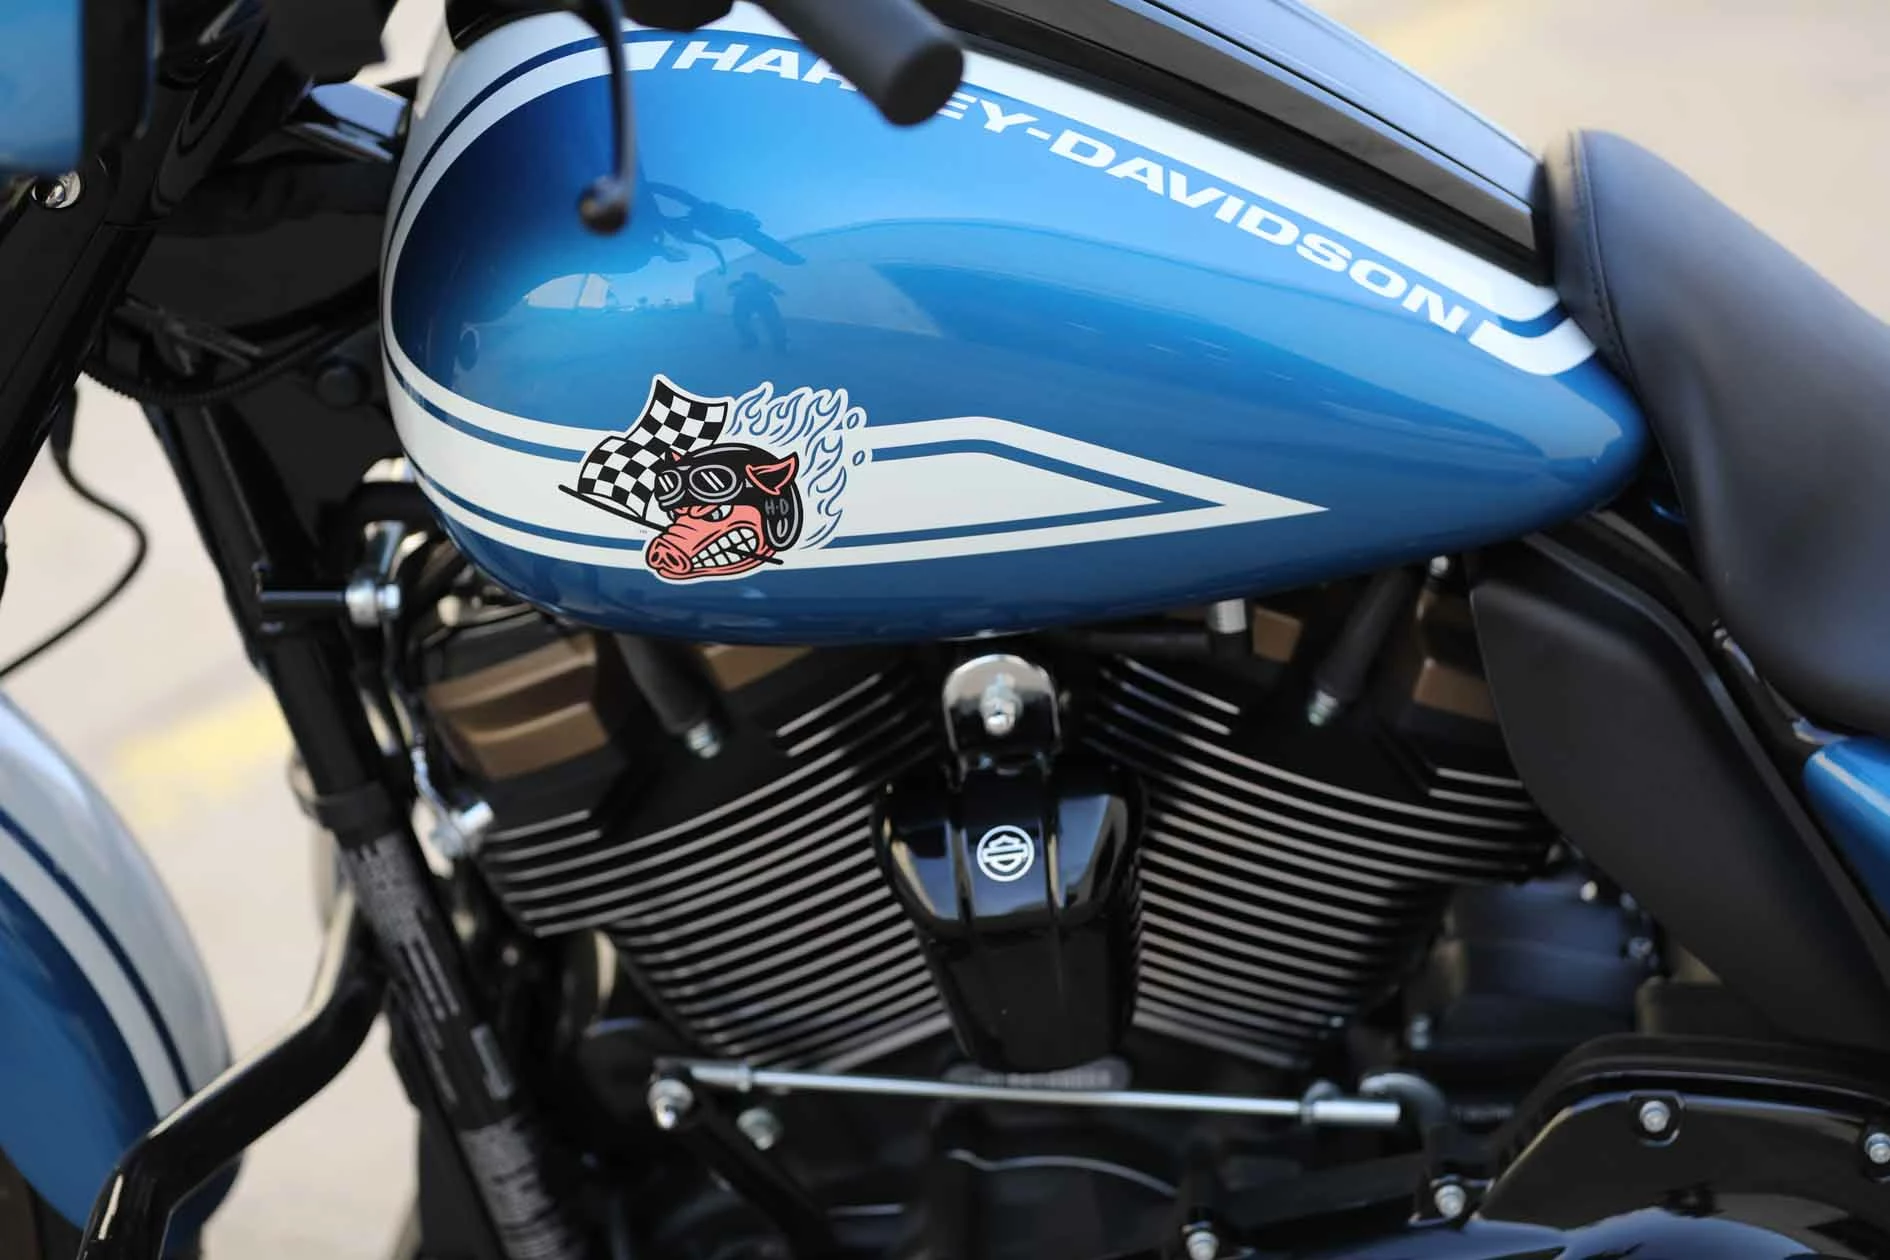 The Harley-Davidson Fast Johnnie logo